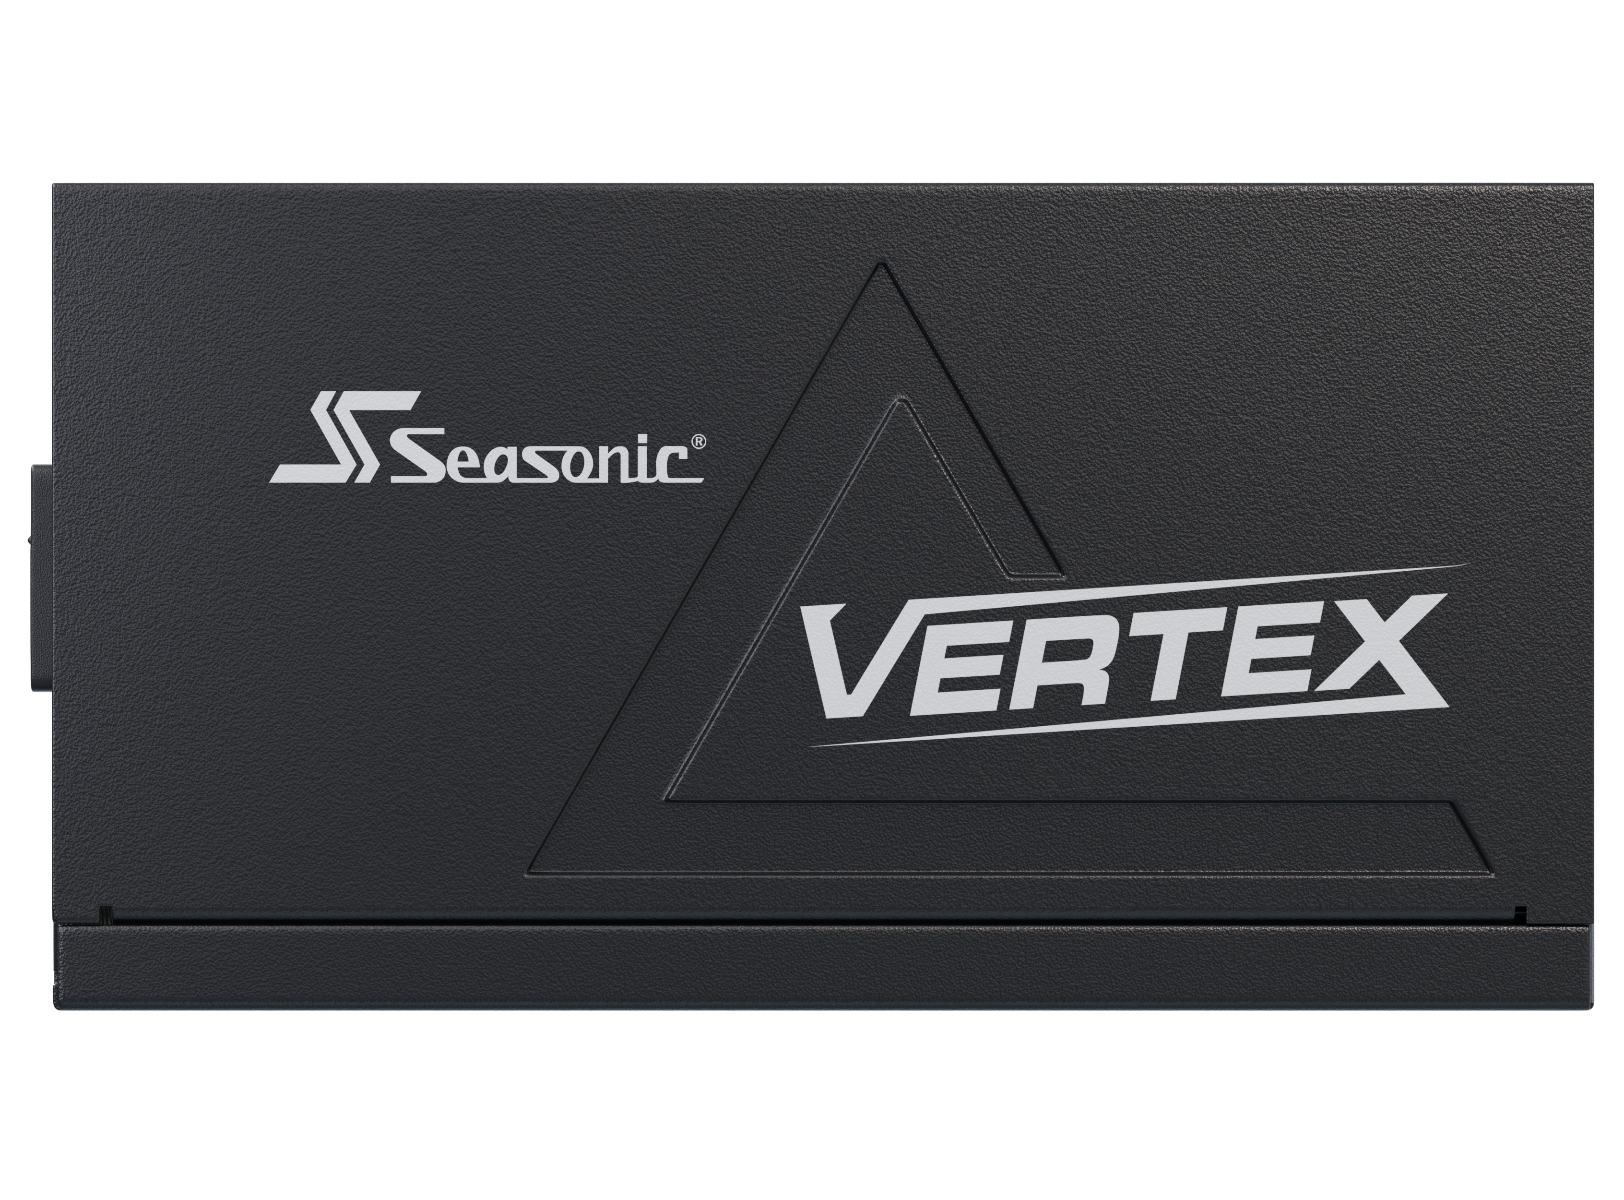 Seasonic VERTEX GX-1200 | ATX 3.0 | 1200W | aktiv | vollmodular | 80 PLUS Gold